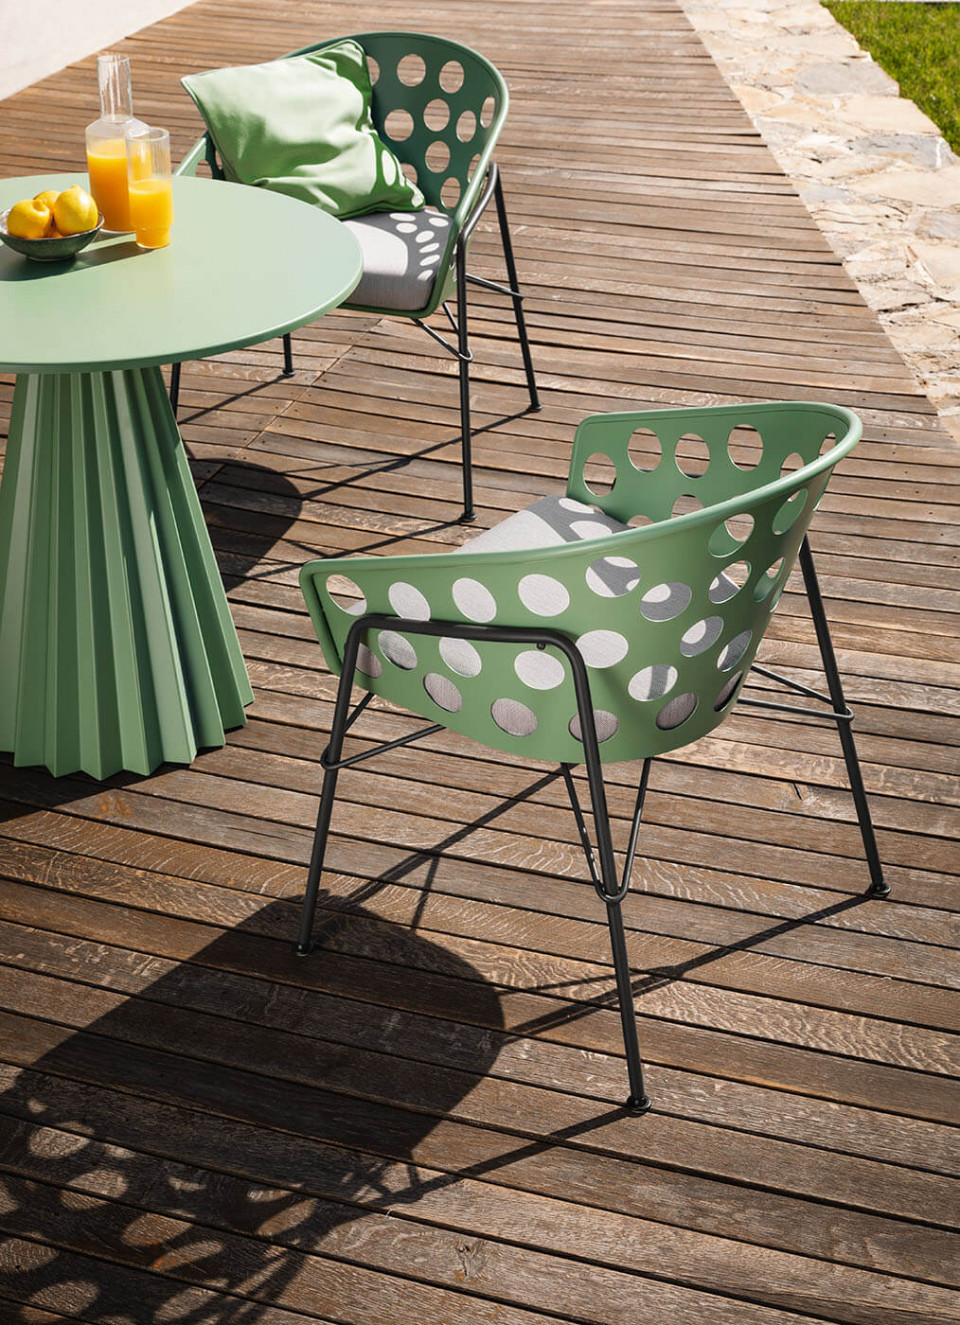 Poltrona outdoor Bolle in metallo verde chiaro, design Paola Navone